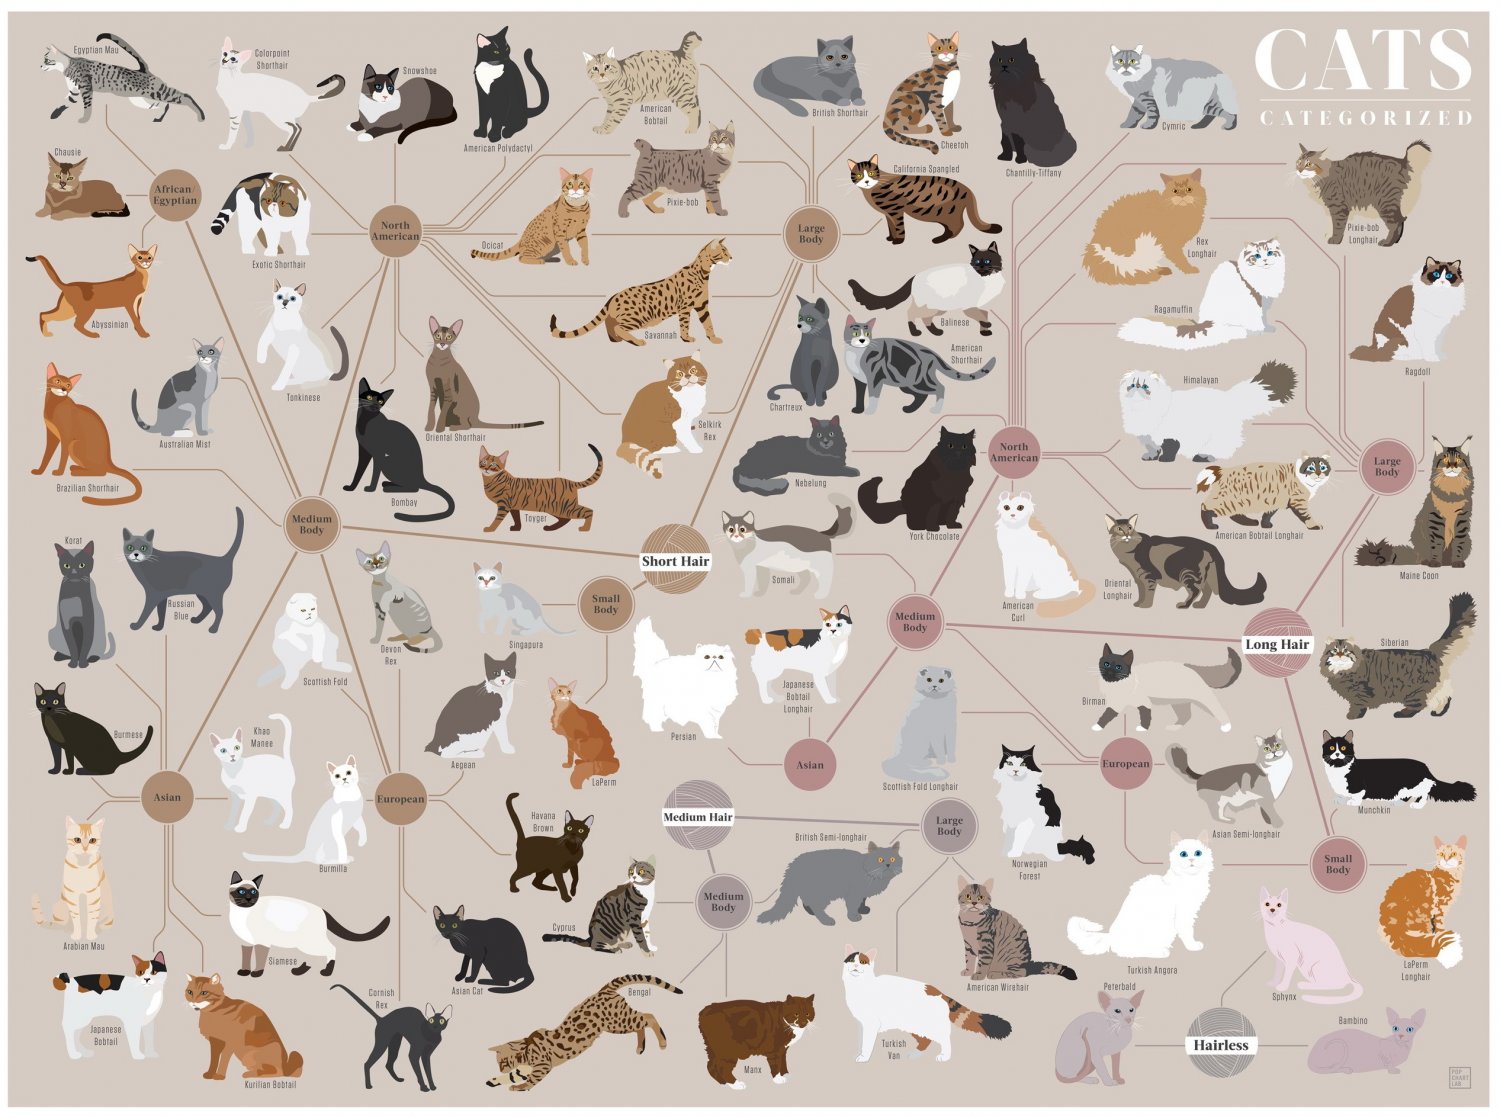 Cats Categorized Infographic Chart 18"x28" (45cm/70cm) Canvas Print